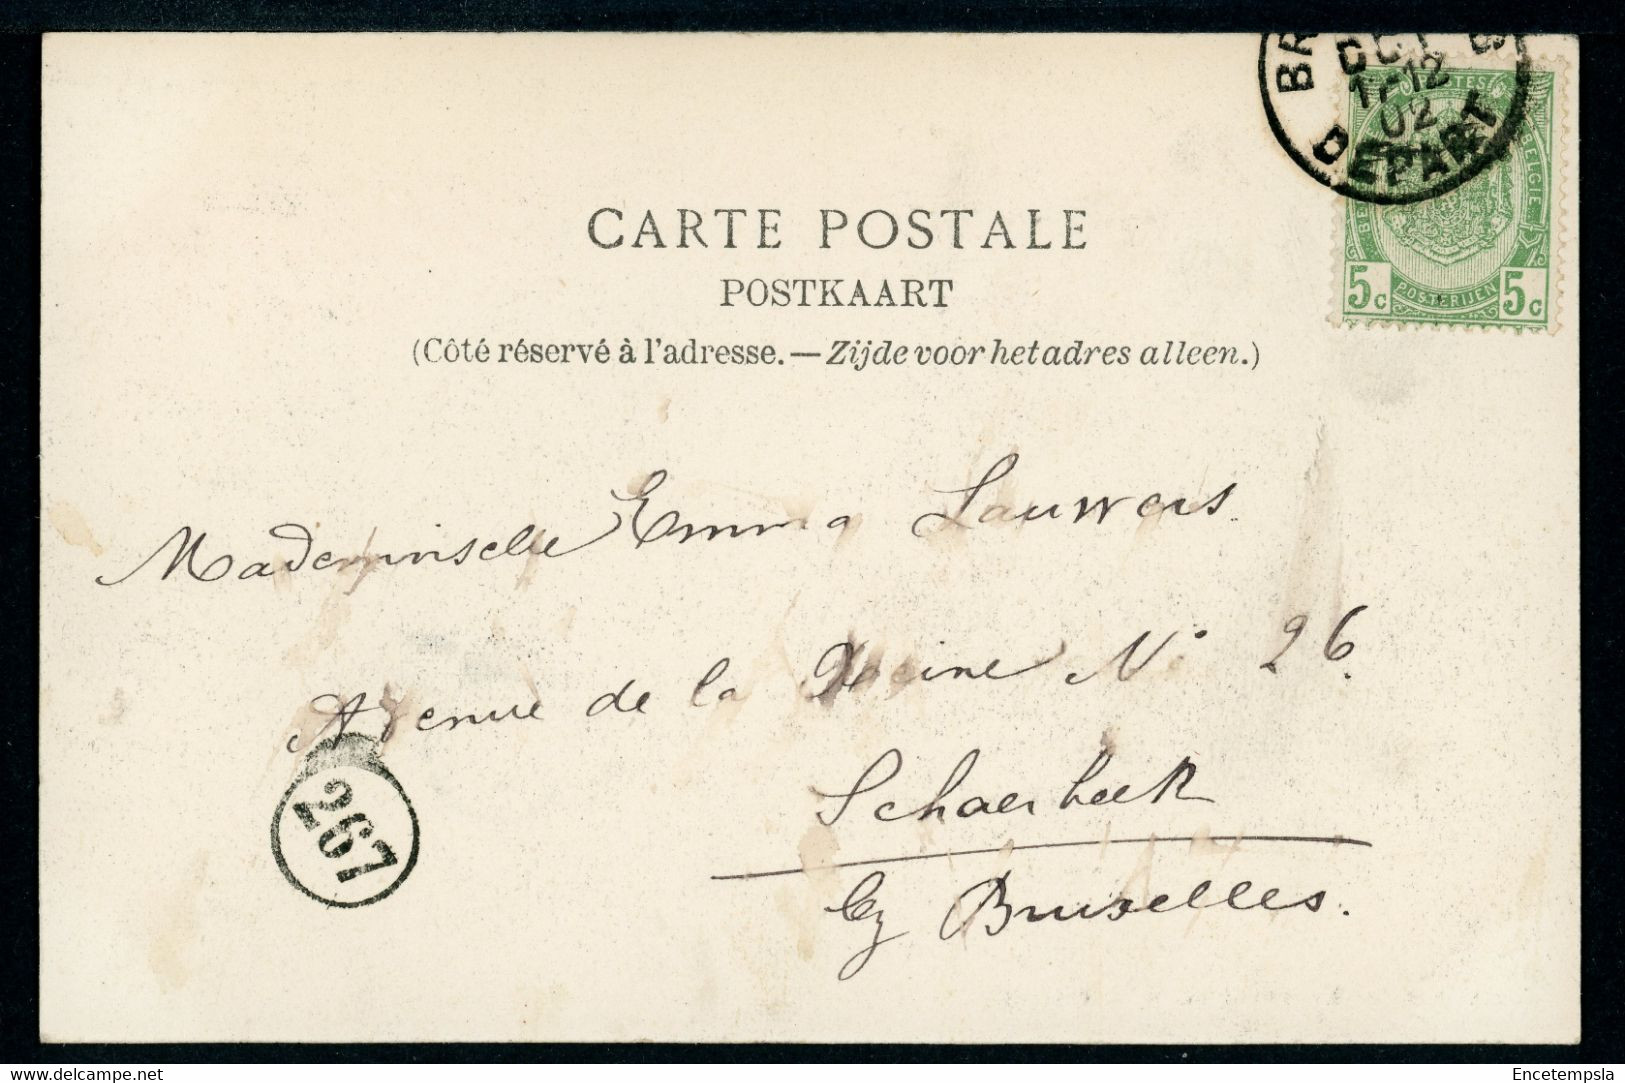 CPA - Carte Postale - Belgique - Bruxelles - Le Canal De Willebroeck - 1902  (CP20371OK) - Hafenwesen